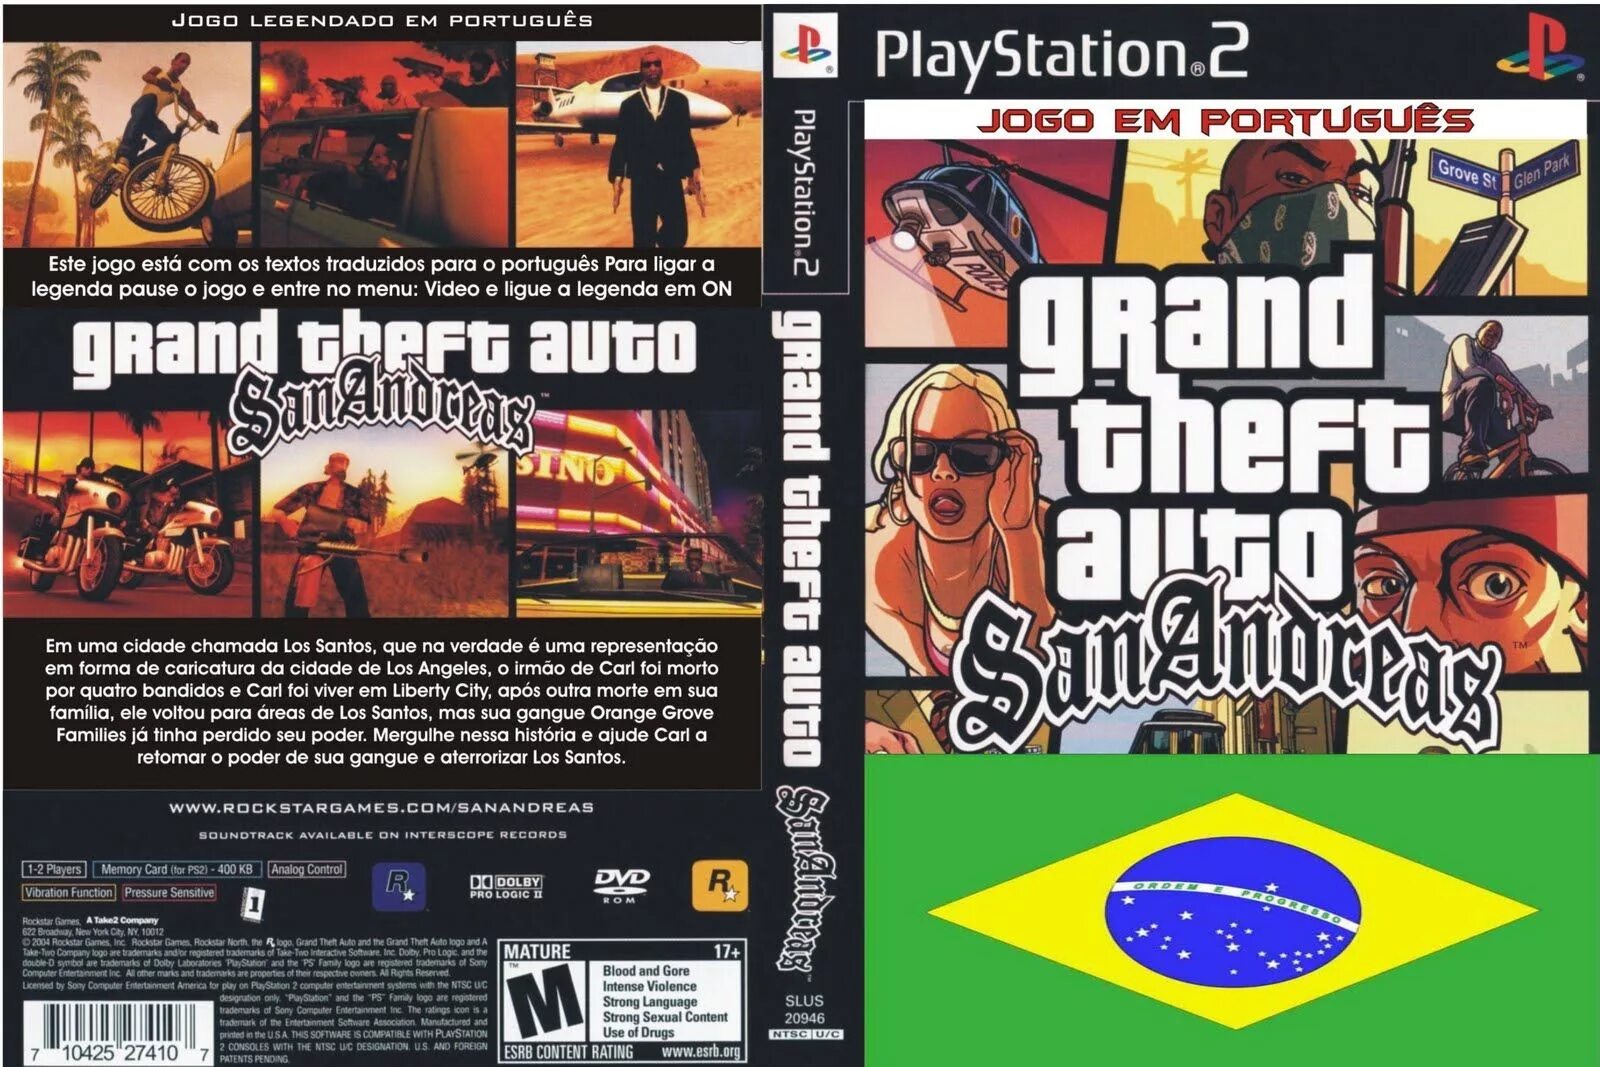 Gta san andreas на playstation. GTA San Andreas ps2 диск. Grand Theft auto диск ps2. PLAYSTATION 2 диск GTA. ГТА Сан андреас плейстейшен 2.